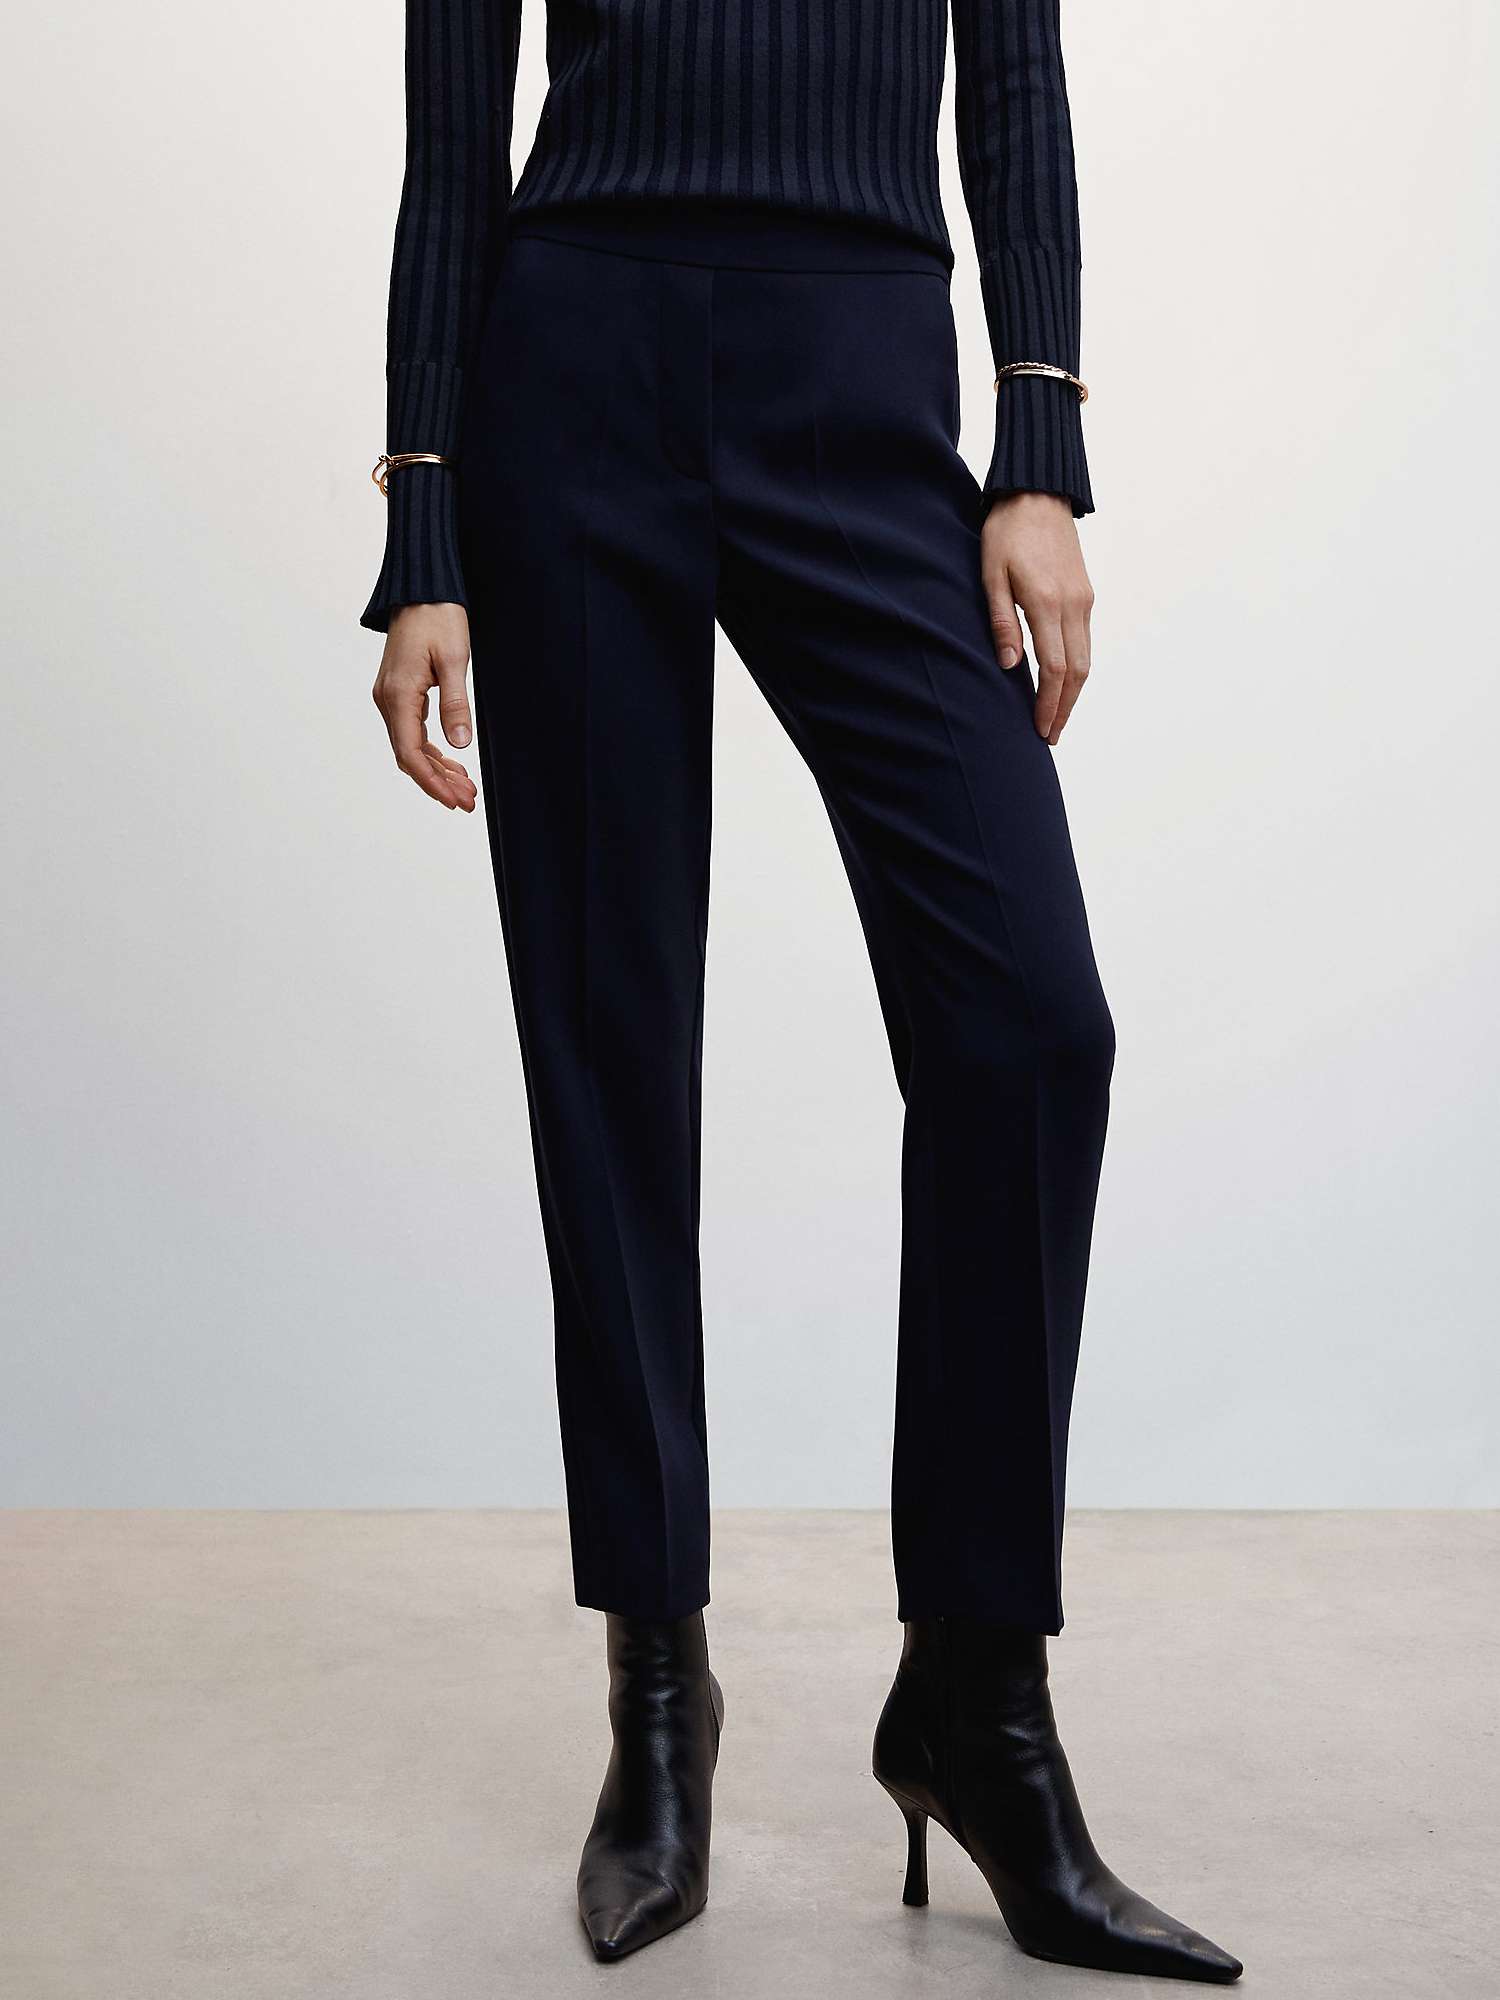 Mango Semiflu Flowy Suit Trousers, Navy at John Lewis & Partners